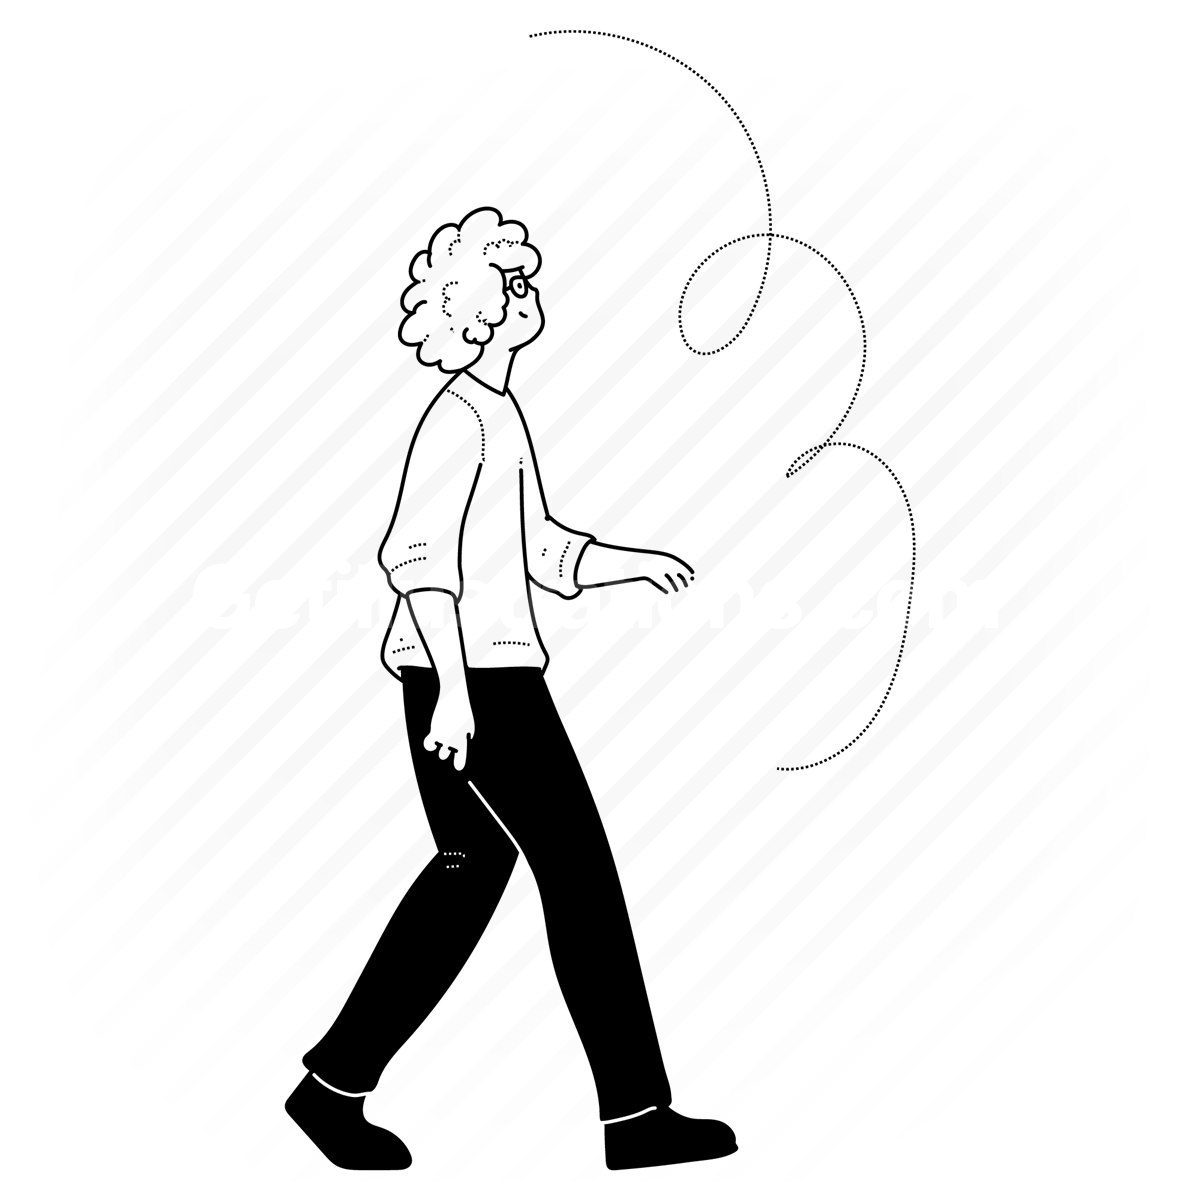 movement, pose, people, person, user, avatar, man, walk, walking, glasses